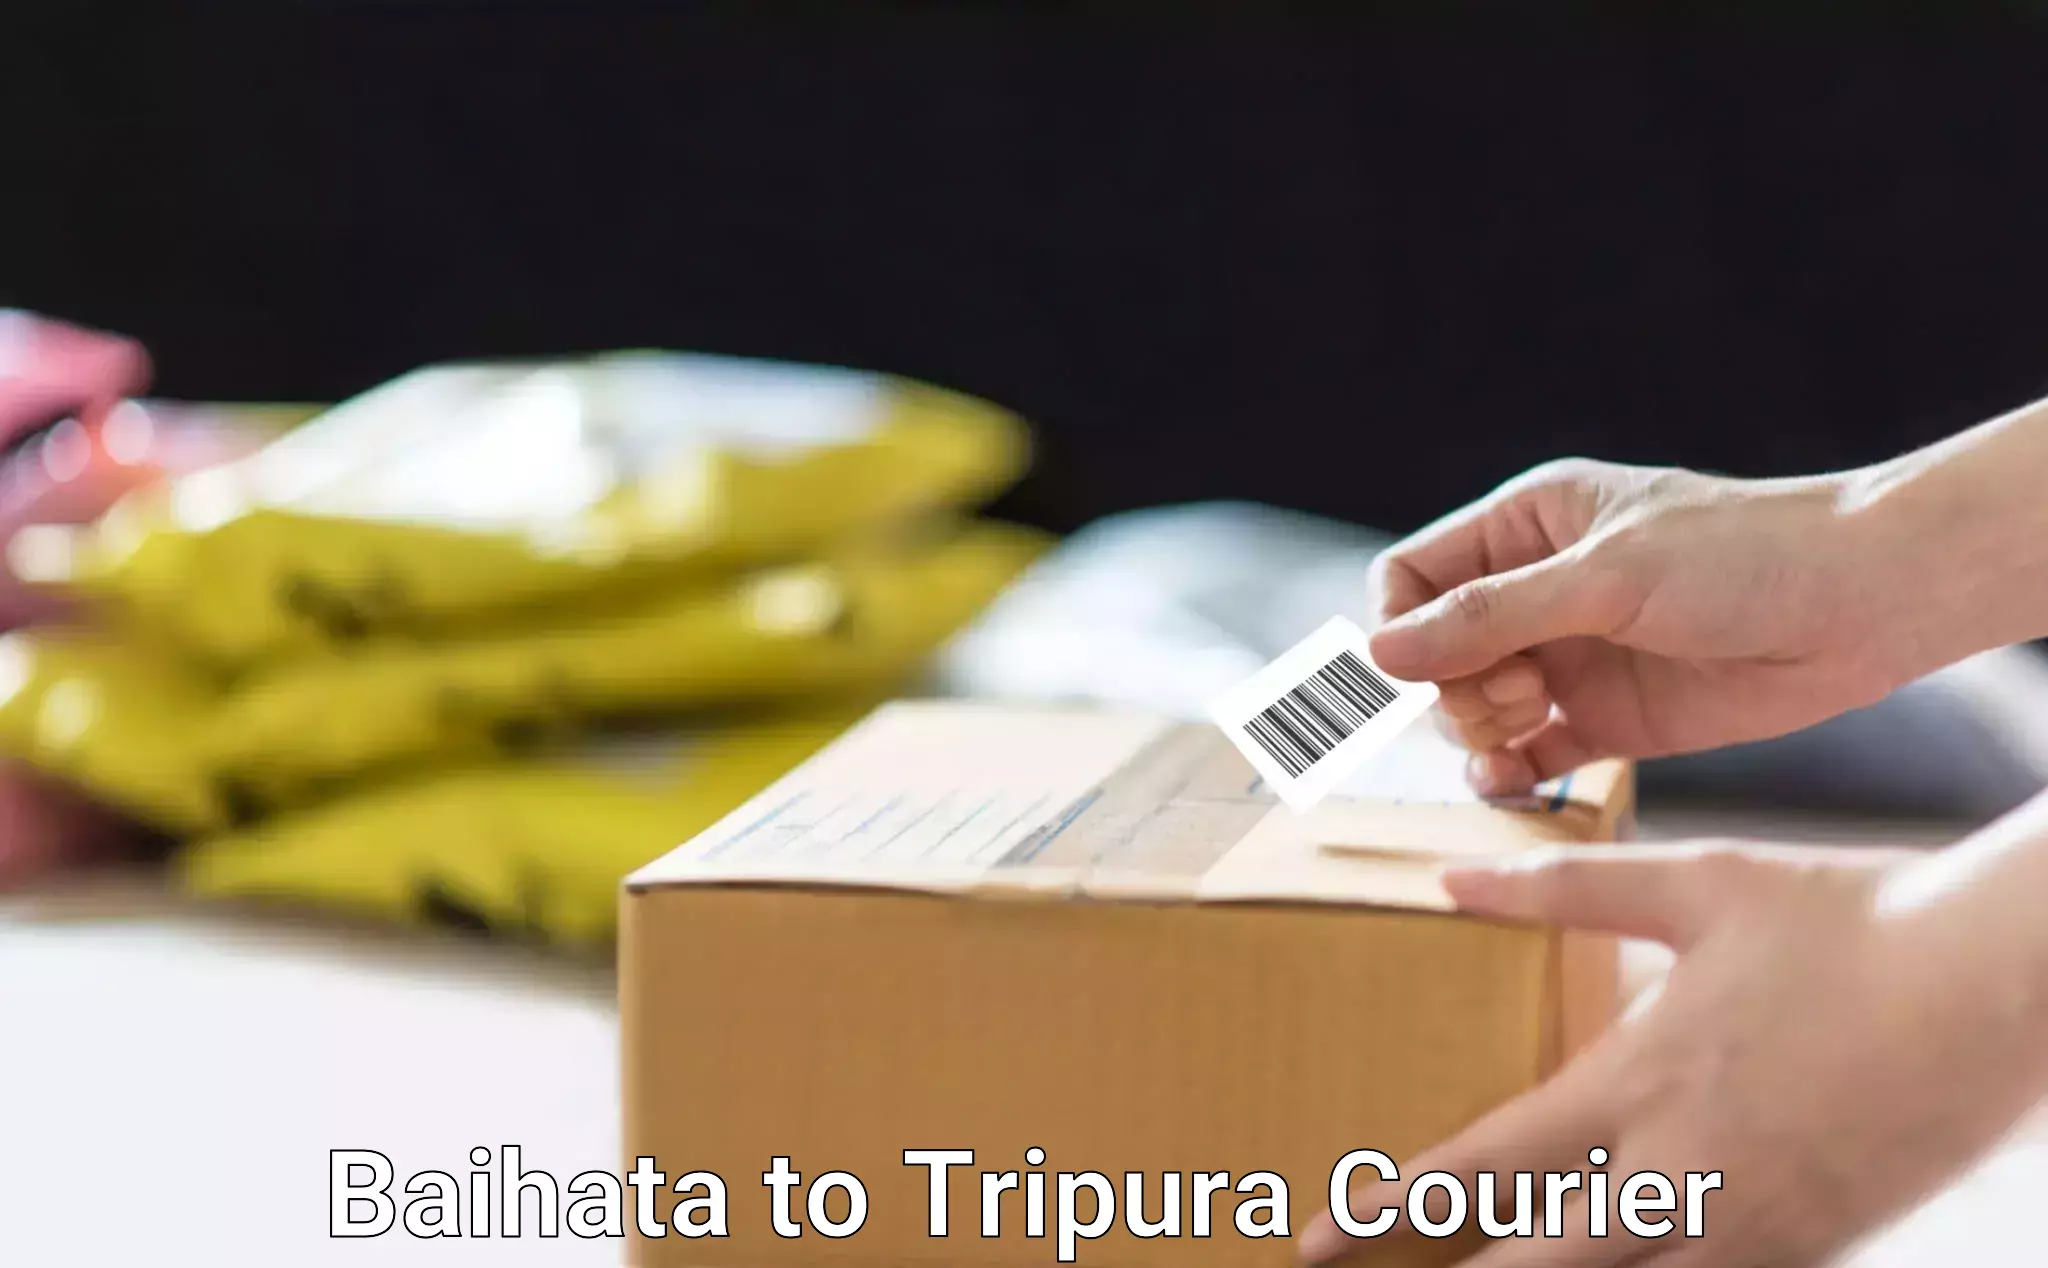 Bulk courier orders Baihata to Tripura